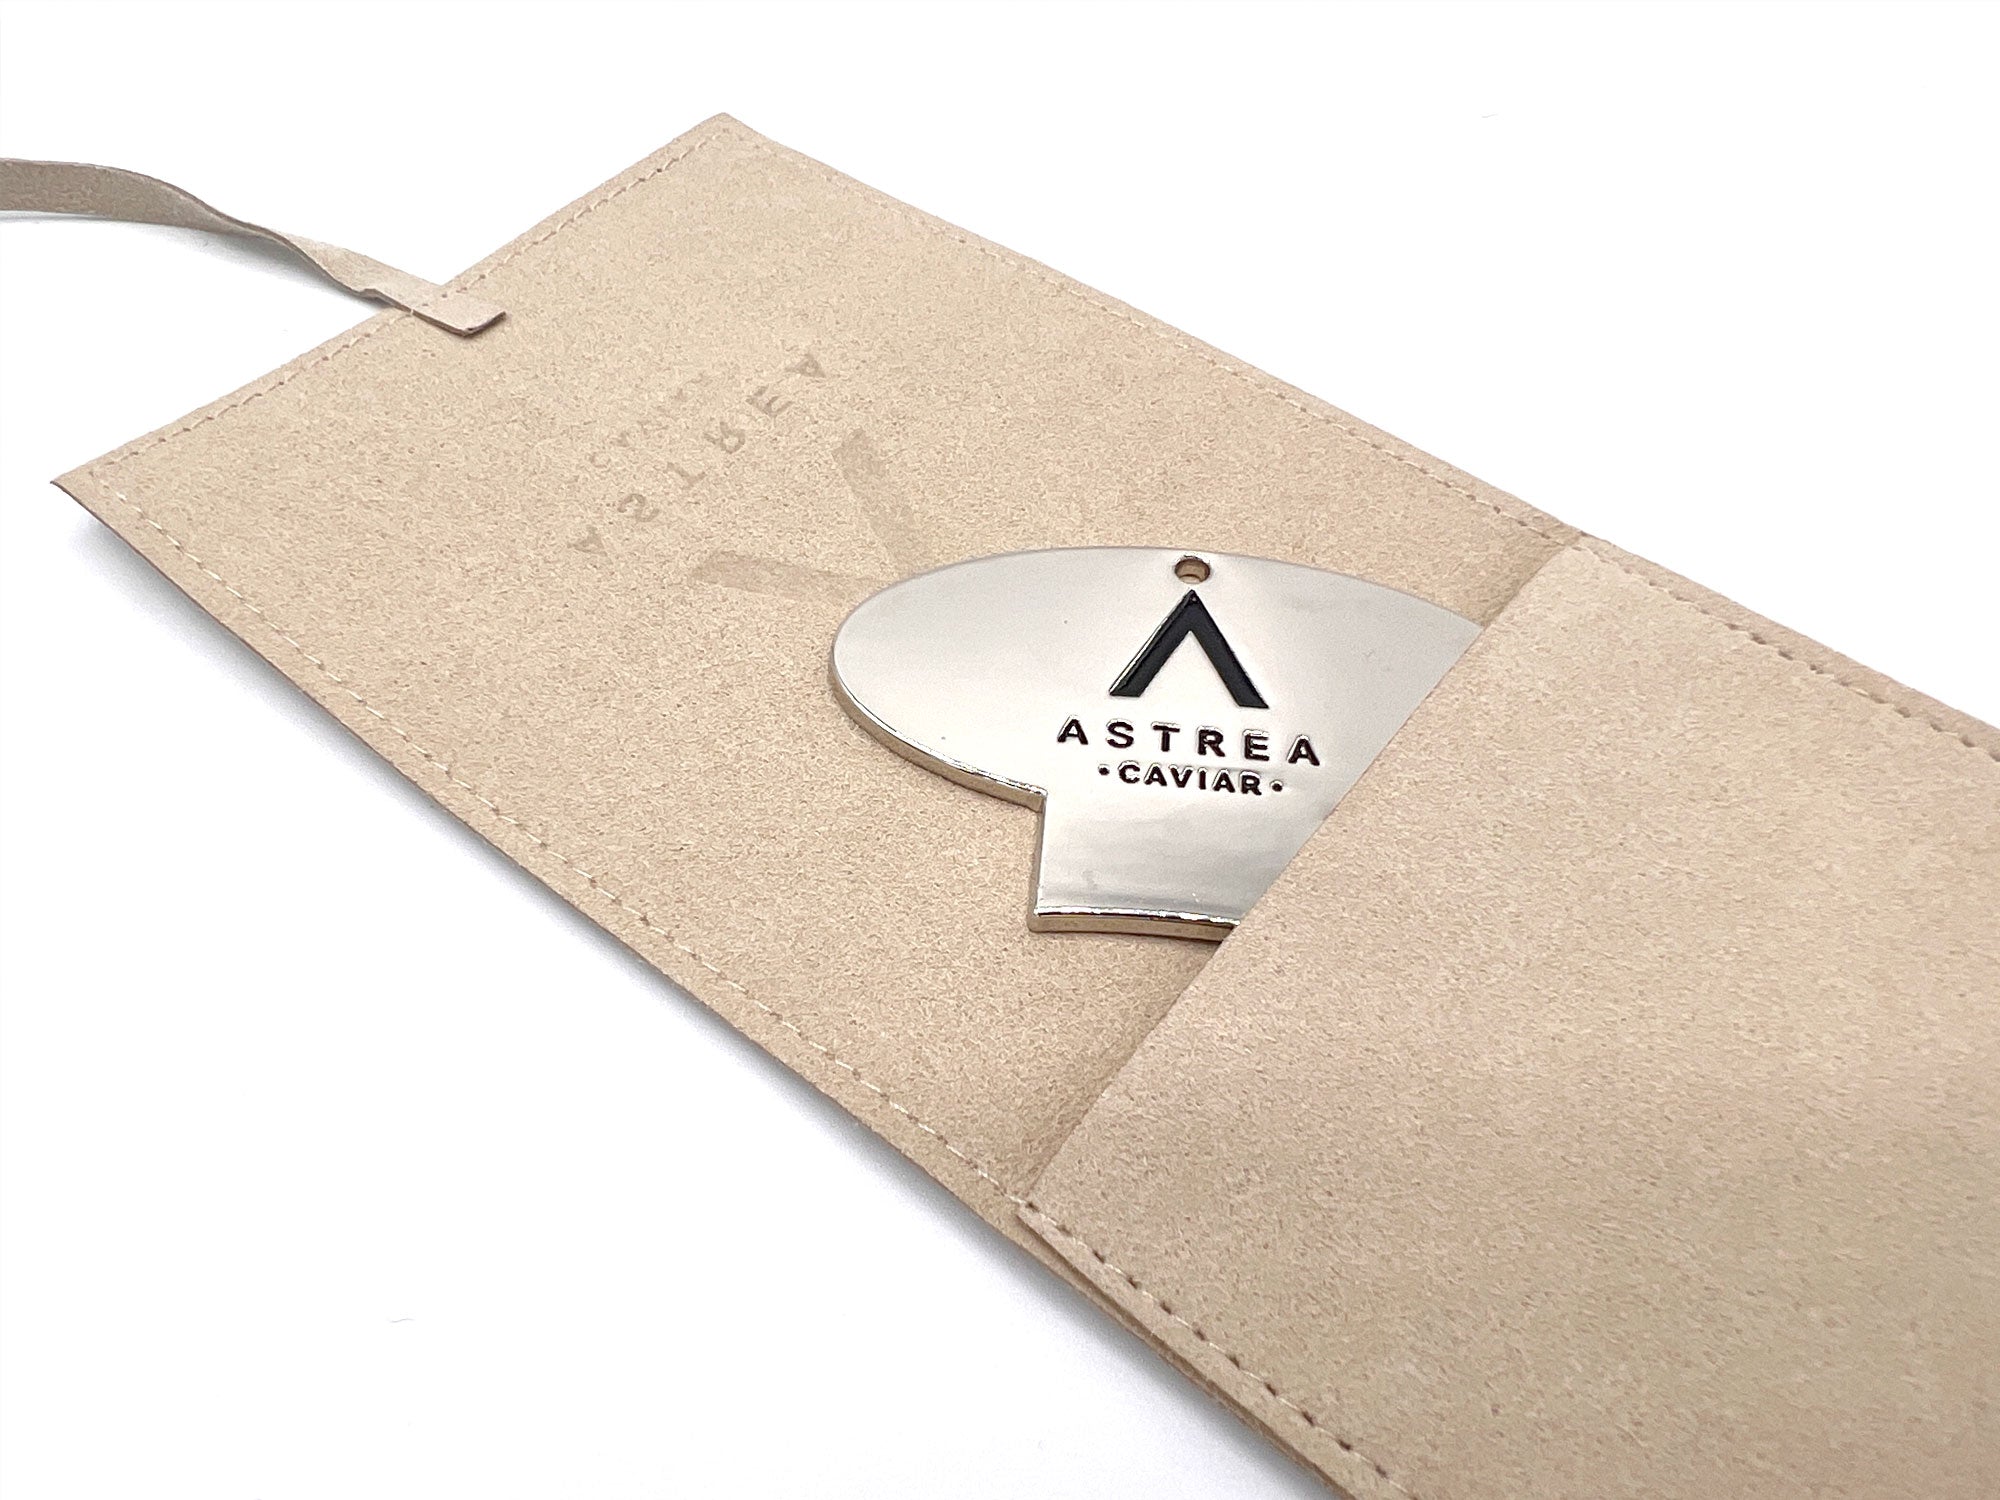 Astrea Caviar Key Opener with Microfiber Pouch